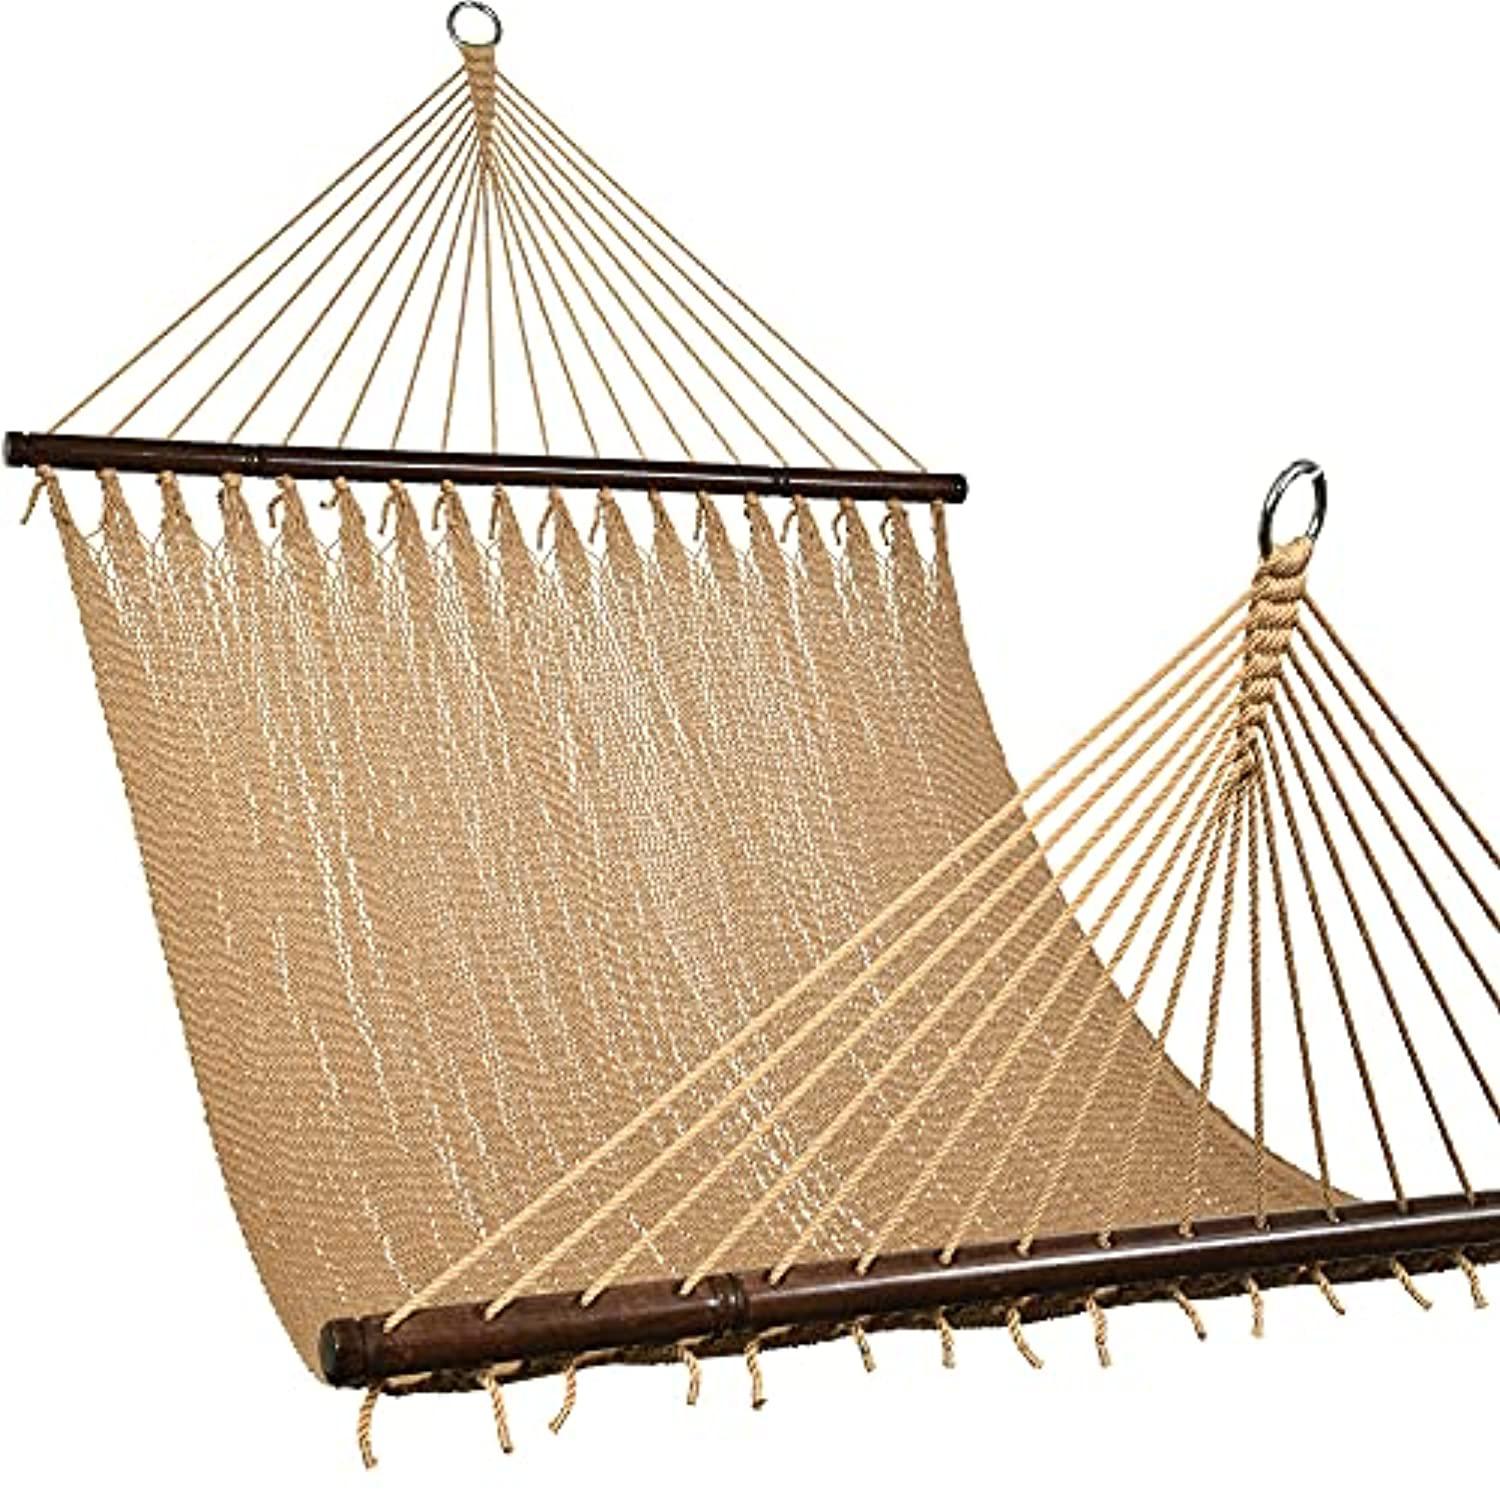 Lazy daze Hammocks lazy daze 2-person caribbean rope hammock, hand woven polyester rope with spreader bars for beach, backyard, patio, 450 lbs w